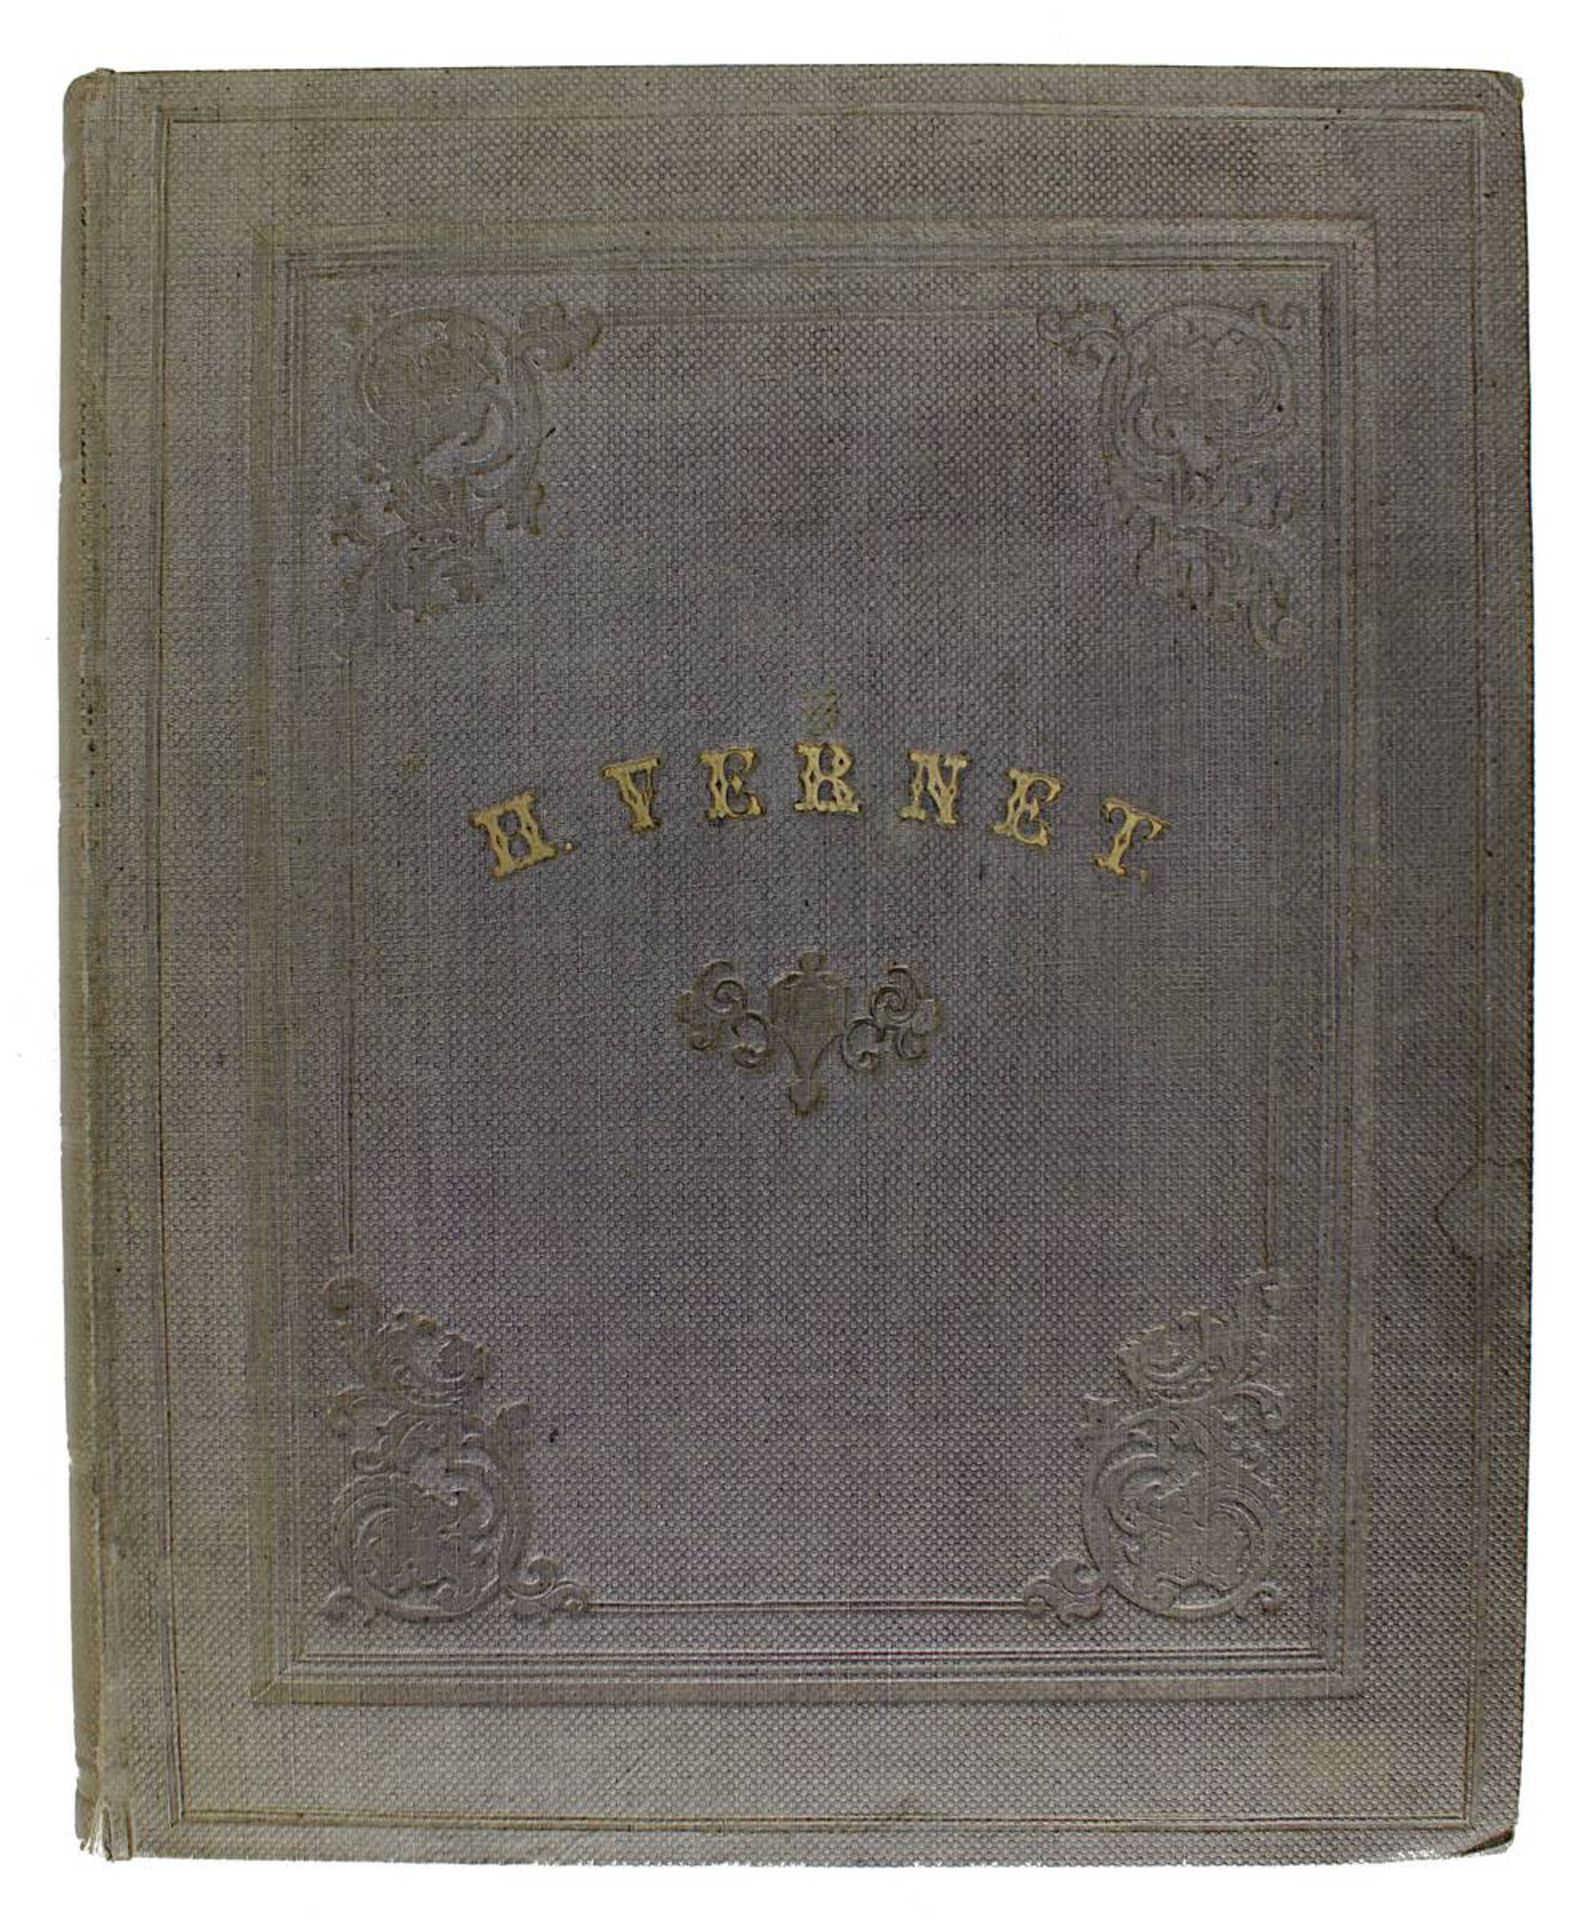 Vernet, Horace, Oeuvres Completes, Karlsruhe o. J. (ca. 1840), Tafelband mit 70 Lithographien und - Bild 3 aus 3